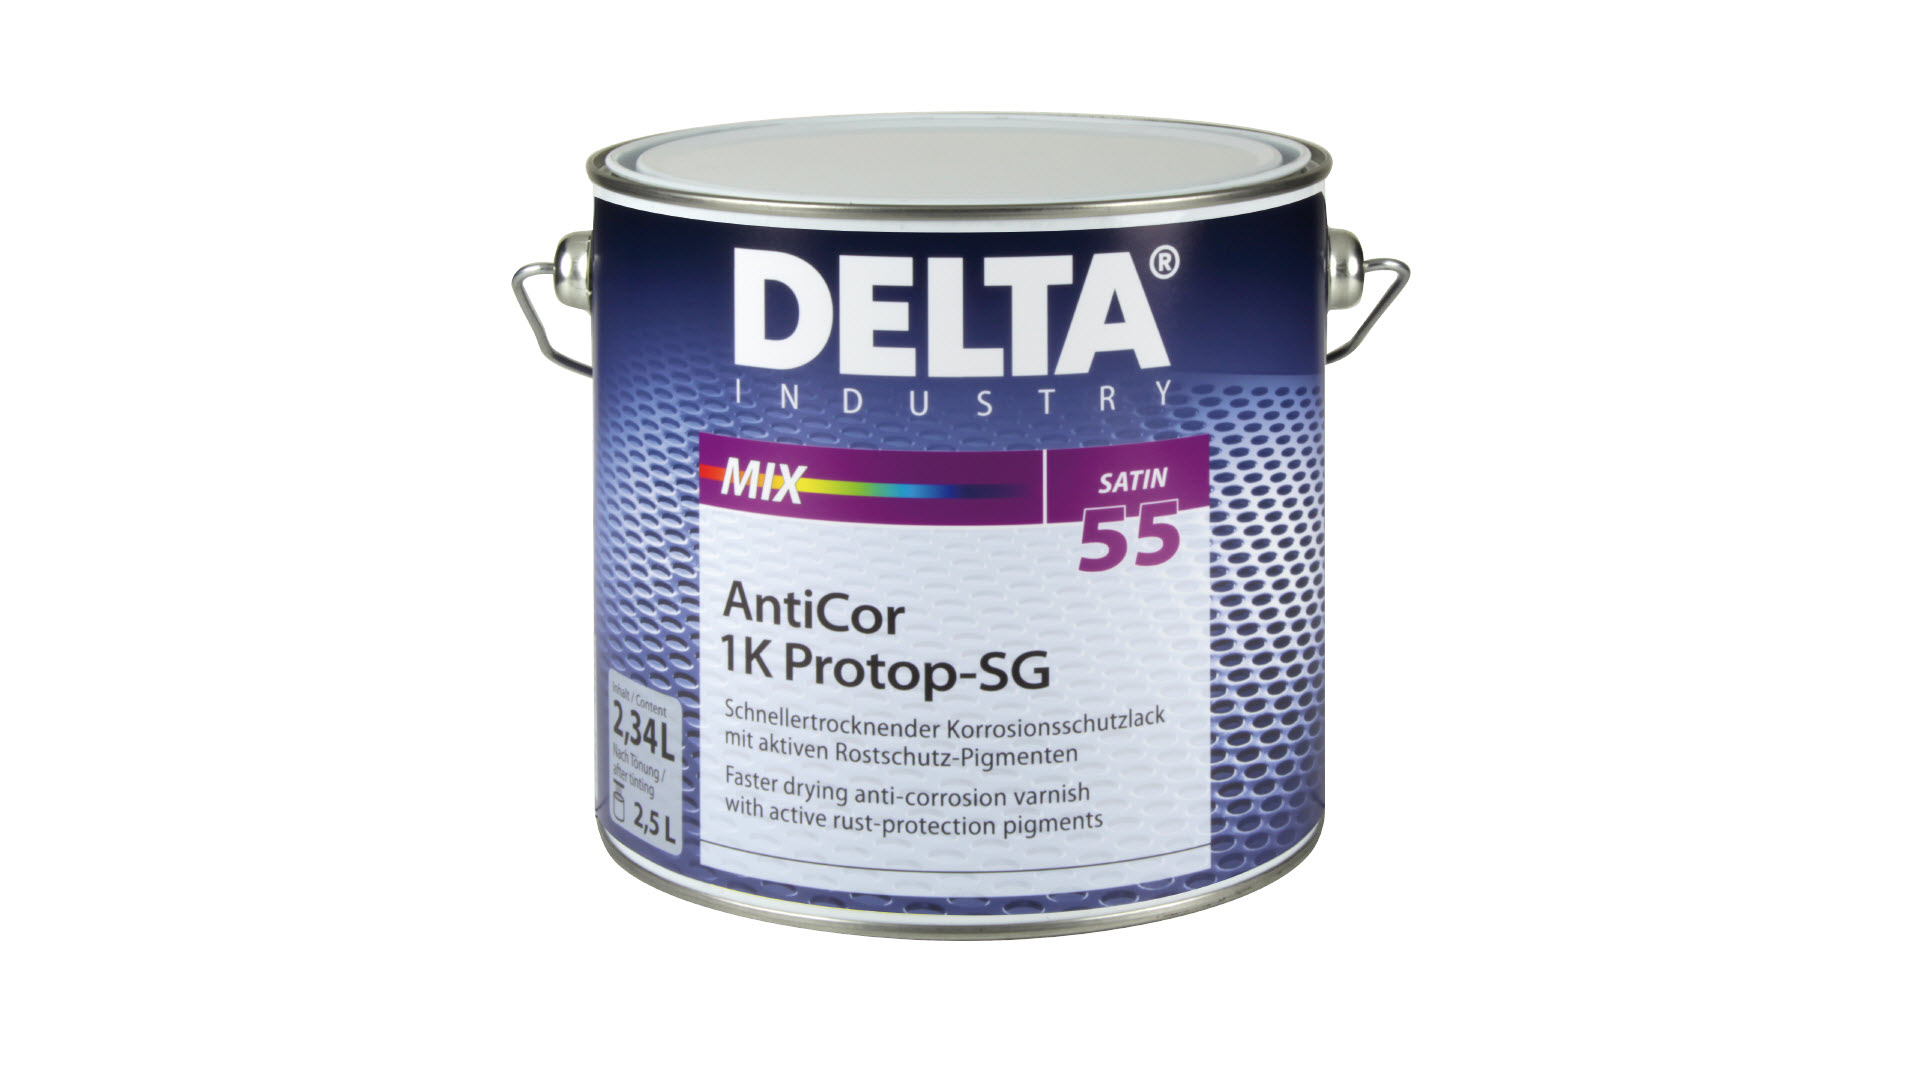 delta-anticor-1k-protop-sg-55